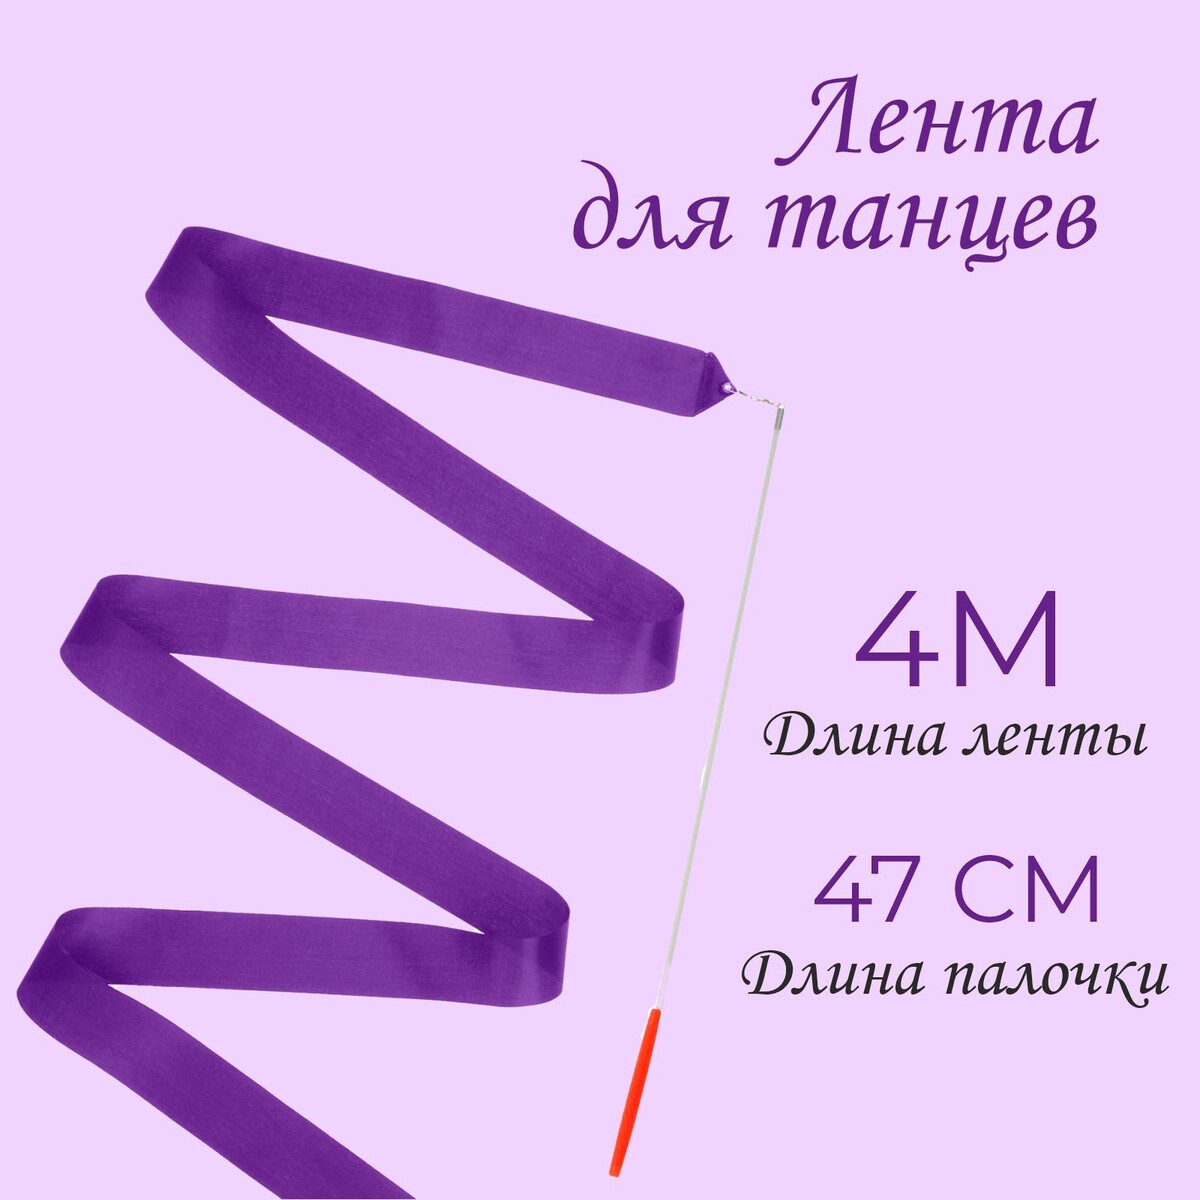 Лента для танцев, длина 4 м, цвет фиолетовый лента для танцев длина 4 м радужный